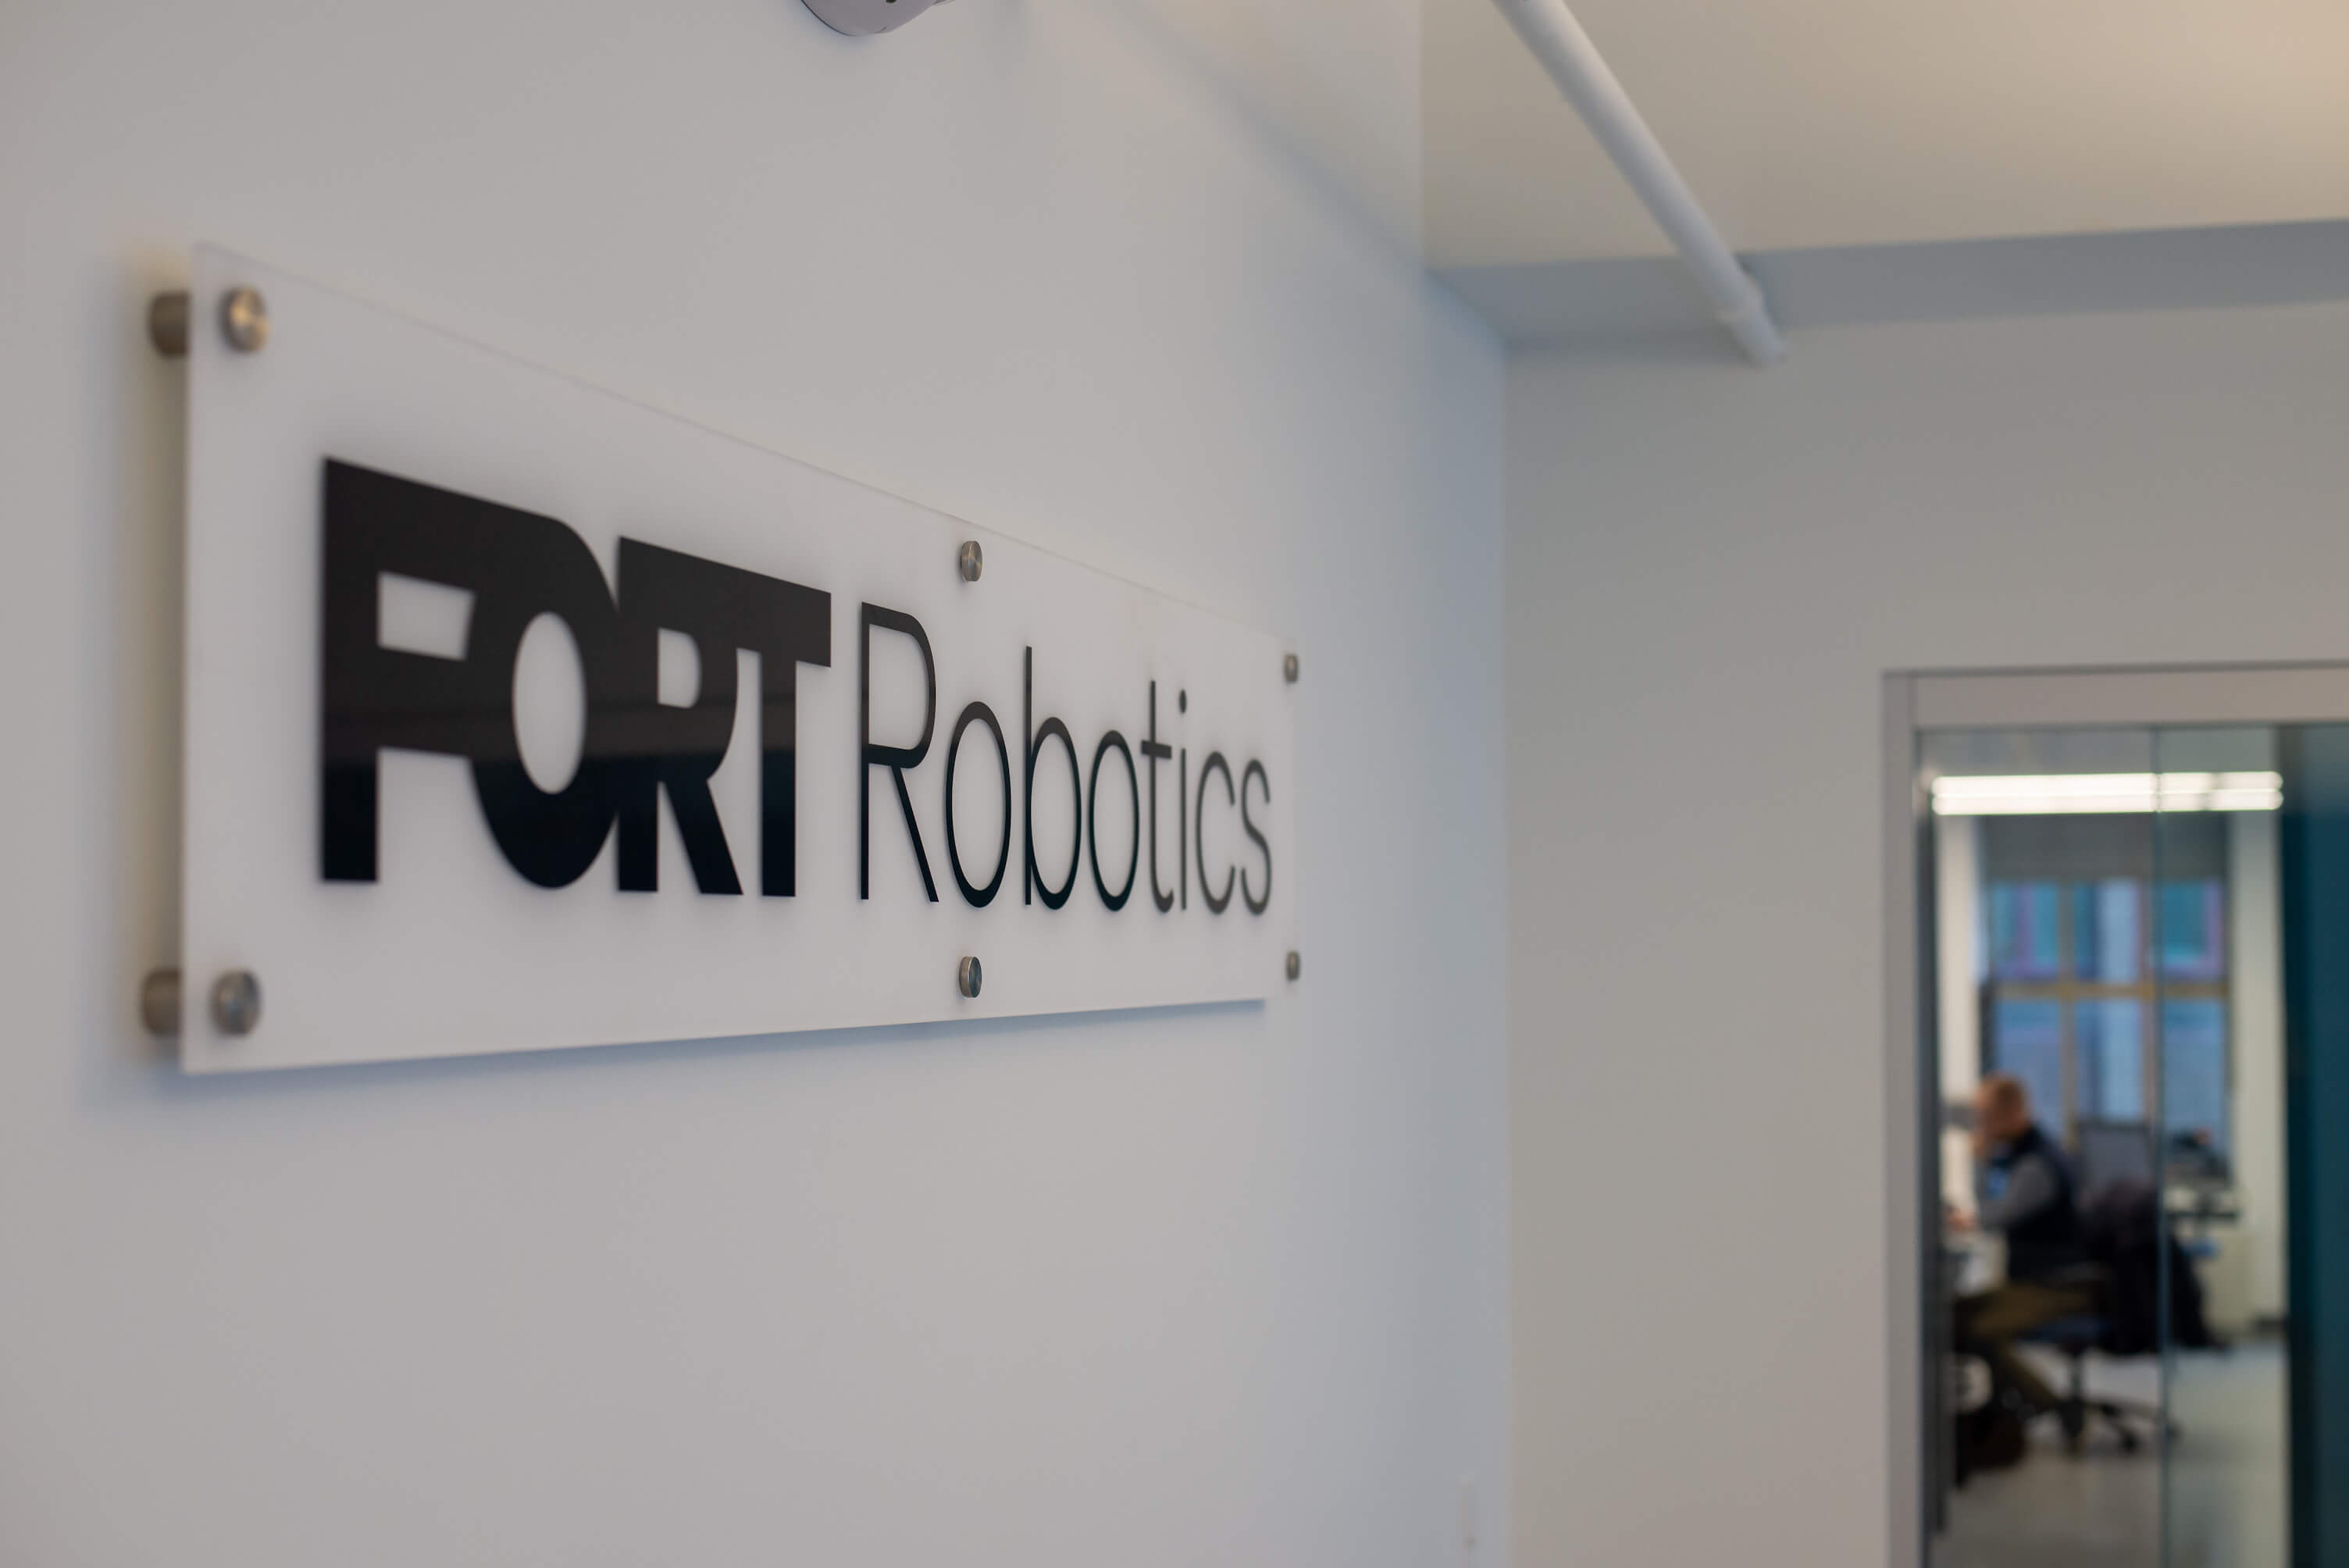 FORT Robotics office